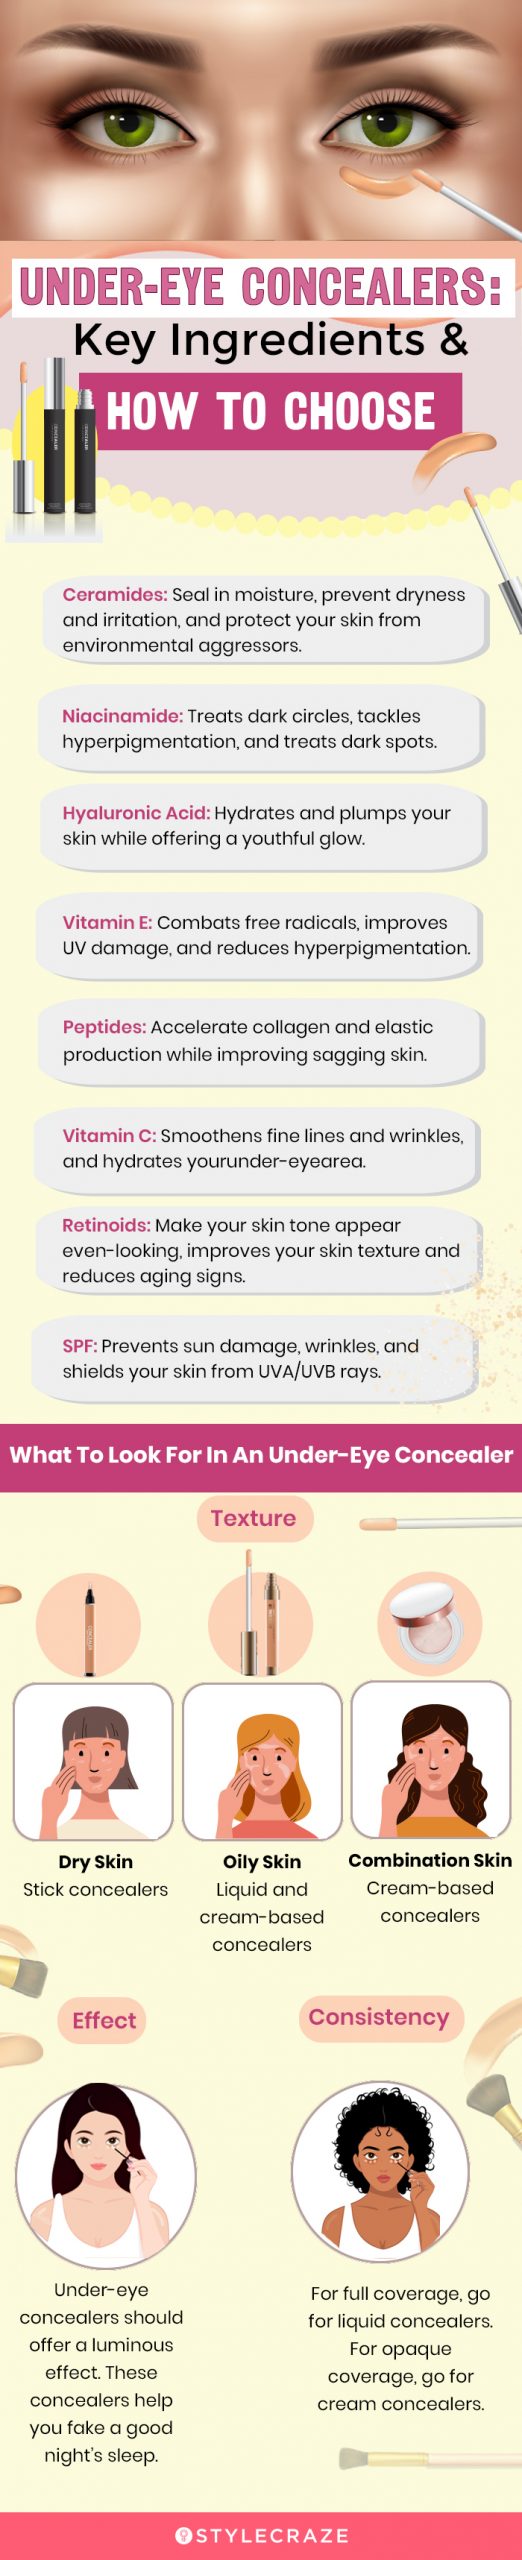 Under-Eye Concealers: Key Ingredients & How To Choose (infographic)